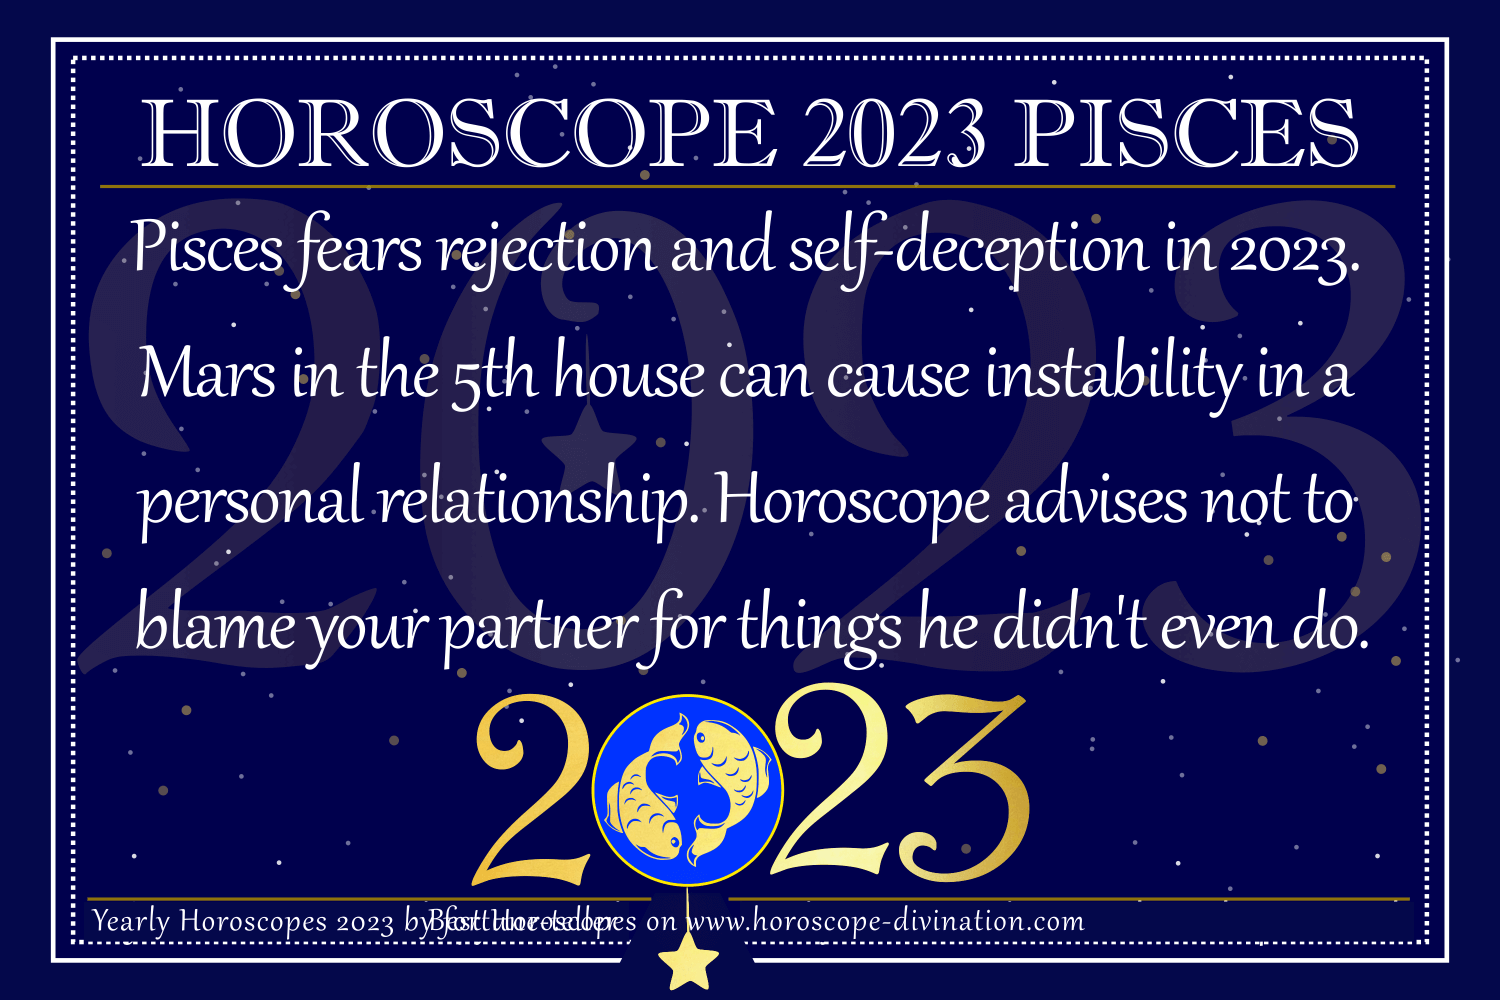 Horoscope 2023 Pisces Yearly Forecast & Future